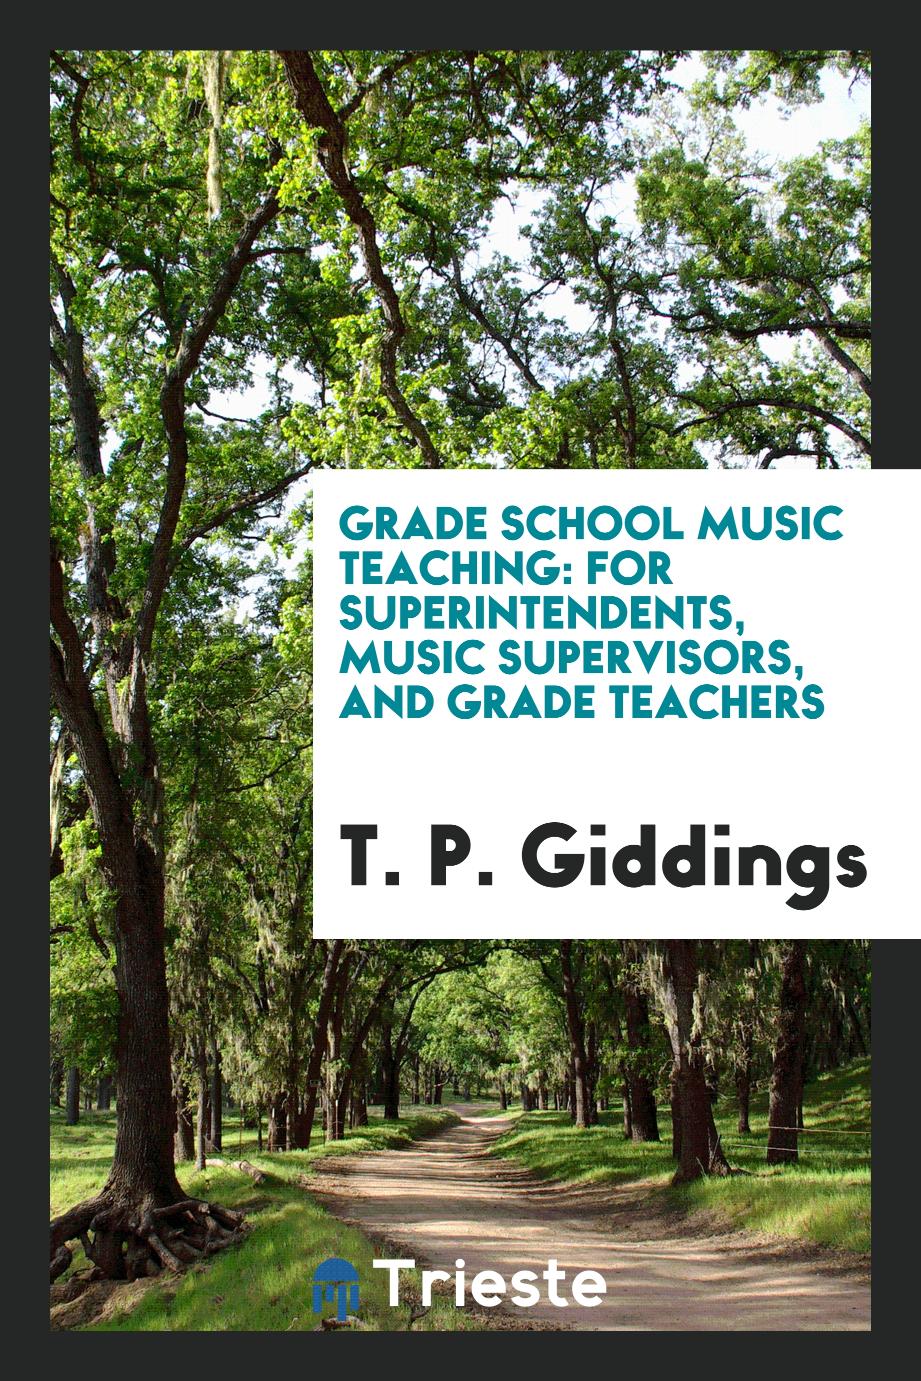 Grade school music teaching: for superintendents, music supervisors, and grade teachers